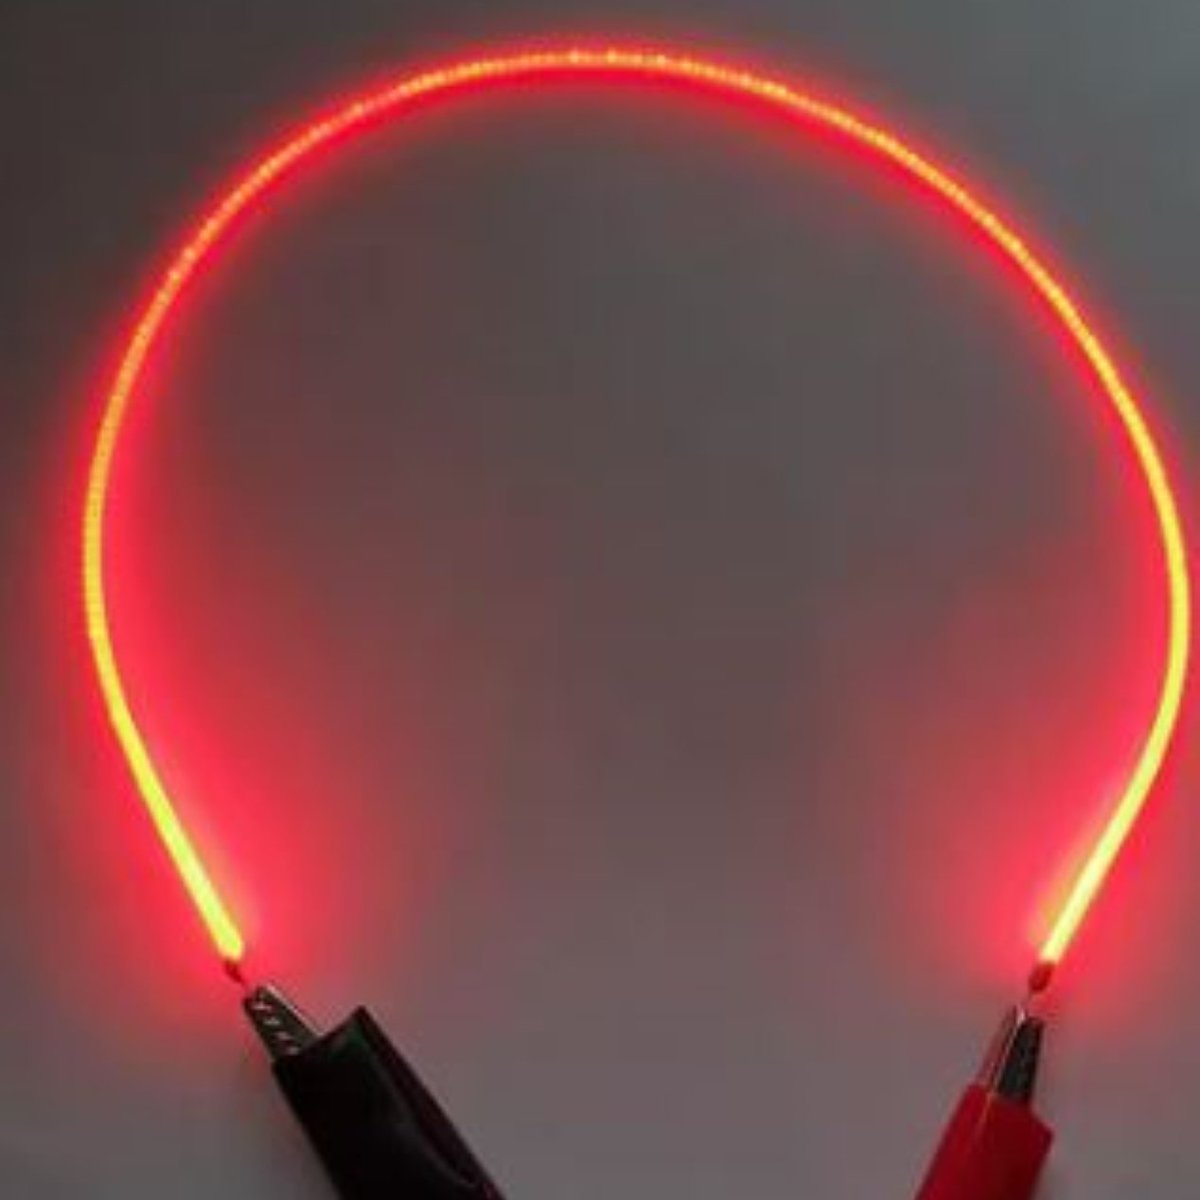 neon light help : r/diyelectronics